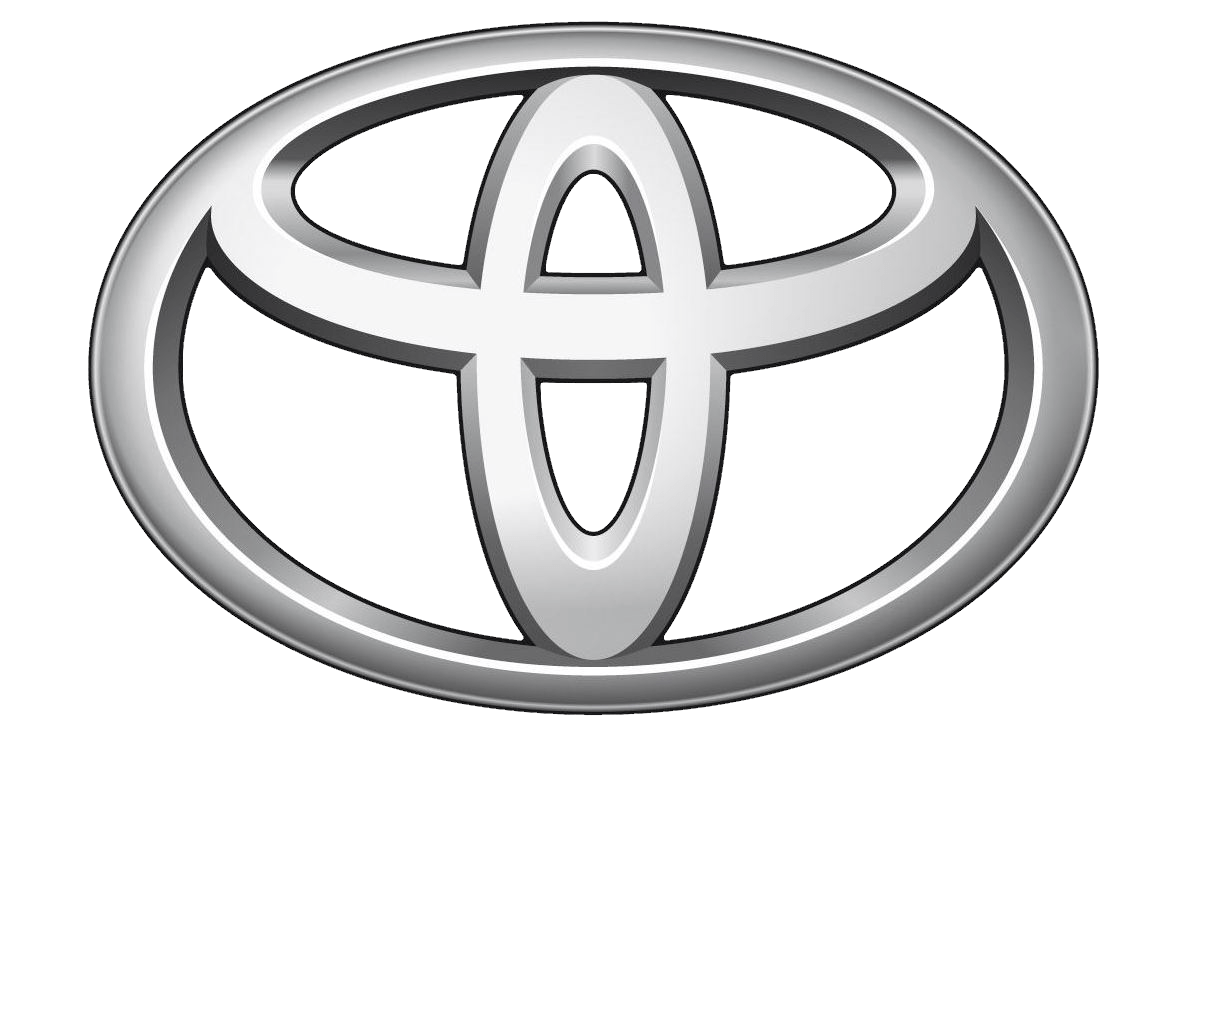 Del Toyota Logo - Toyota is a car company | LOGOS | Pinterest